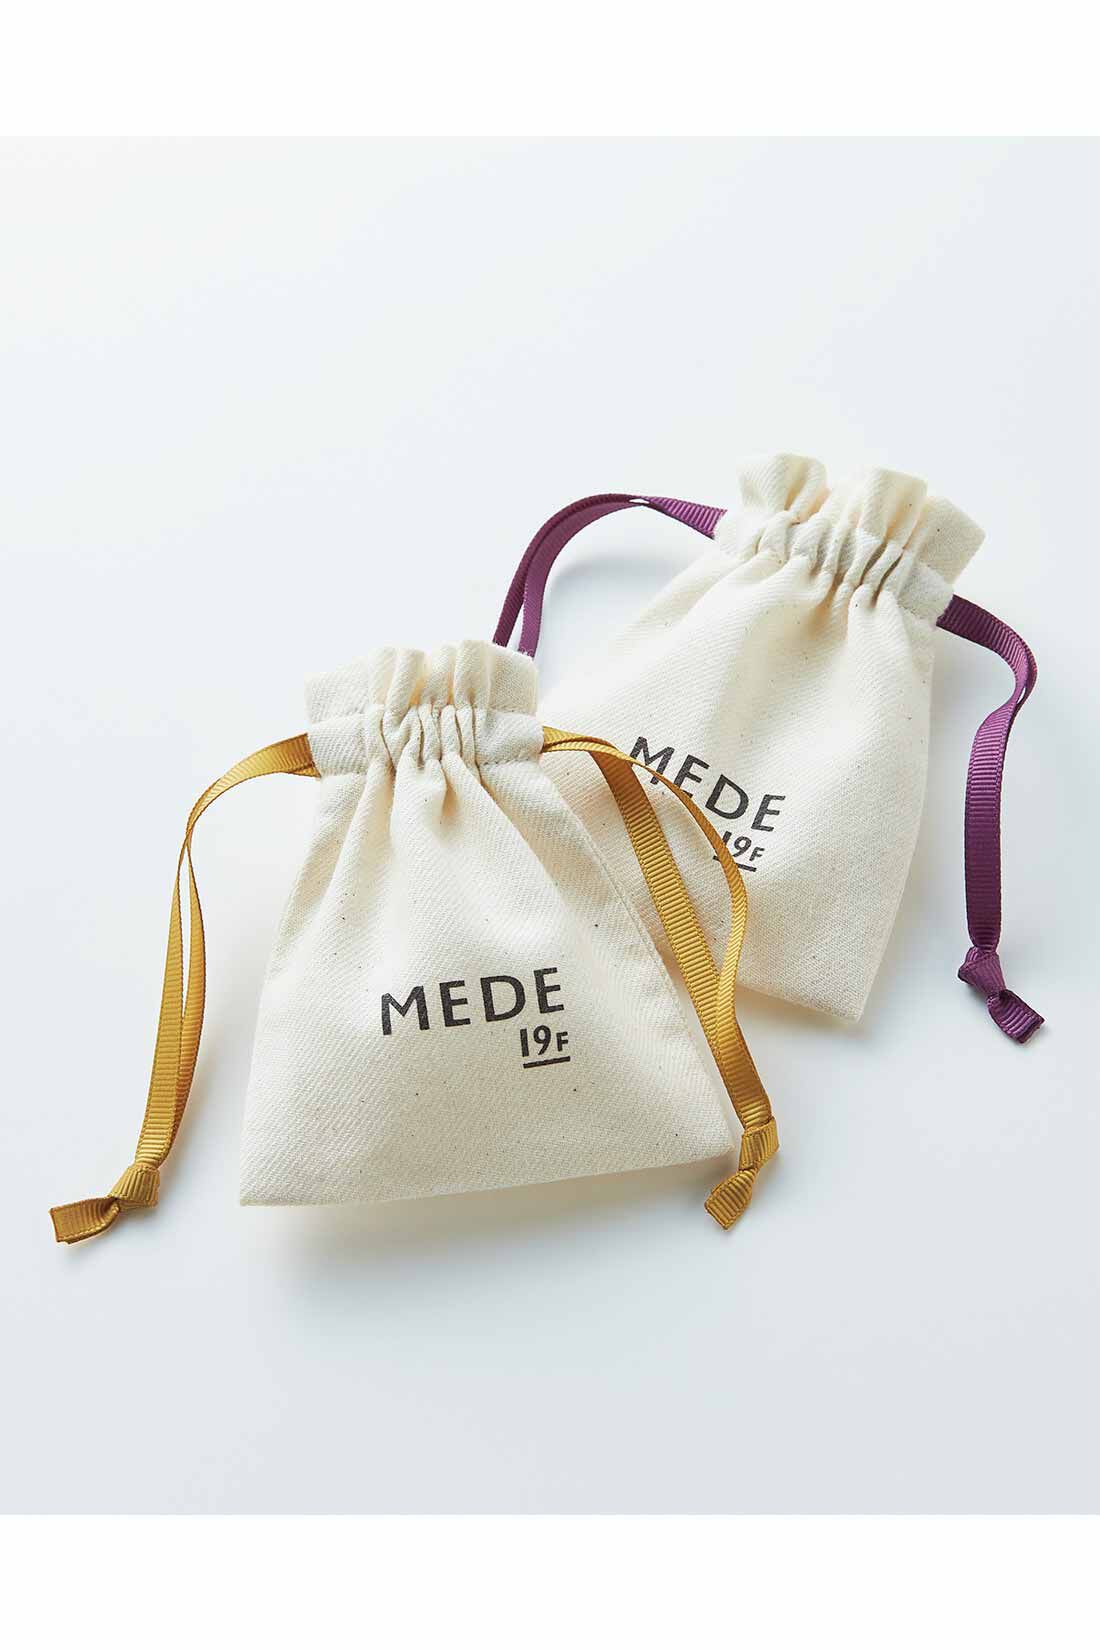 MEDE19F|YPAC for MEDE19F　フランス製陶器ボタンイヤリング type.15|MEDE19Fオリジナルきんちゃくに入れてお届けします。